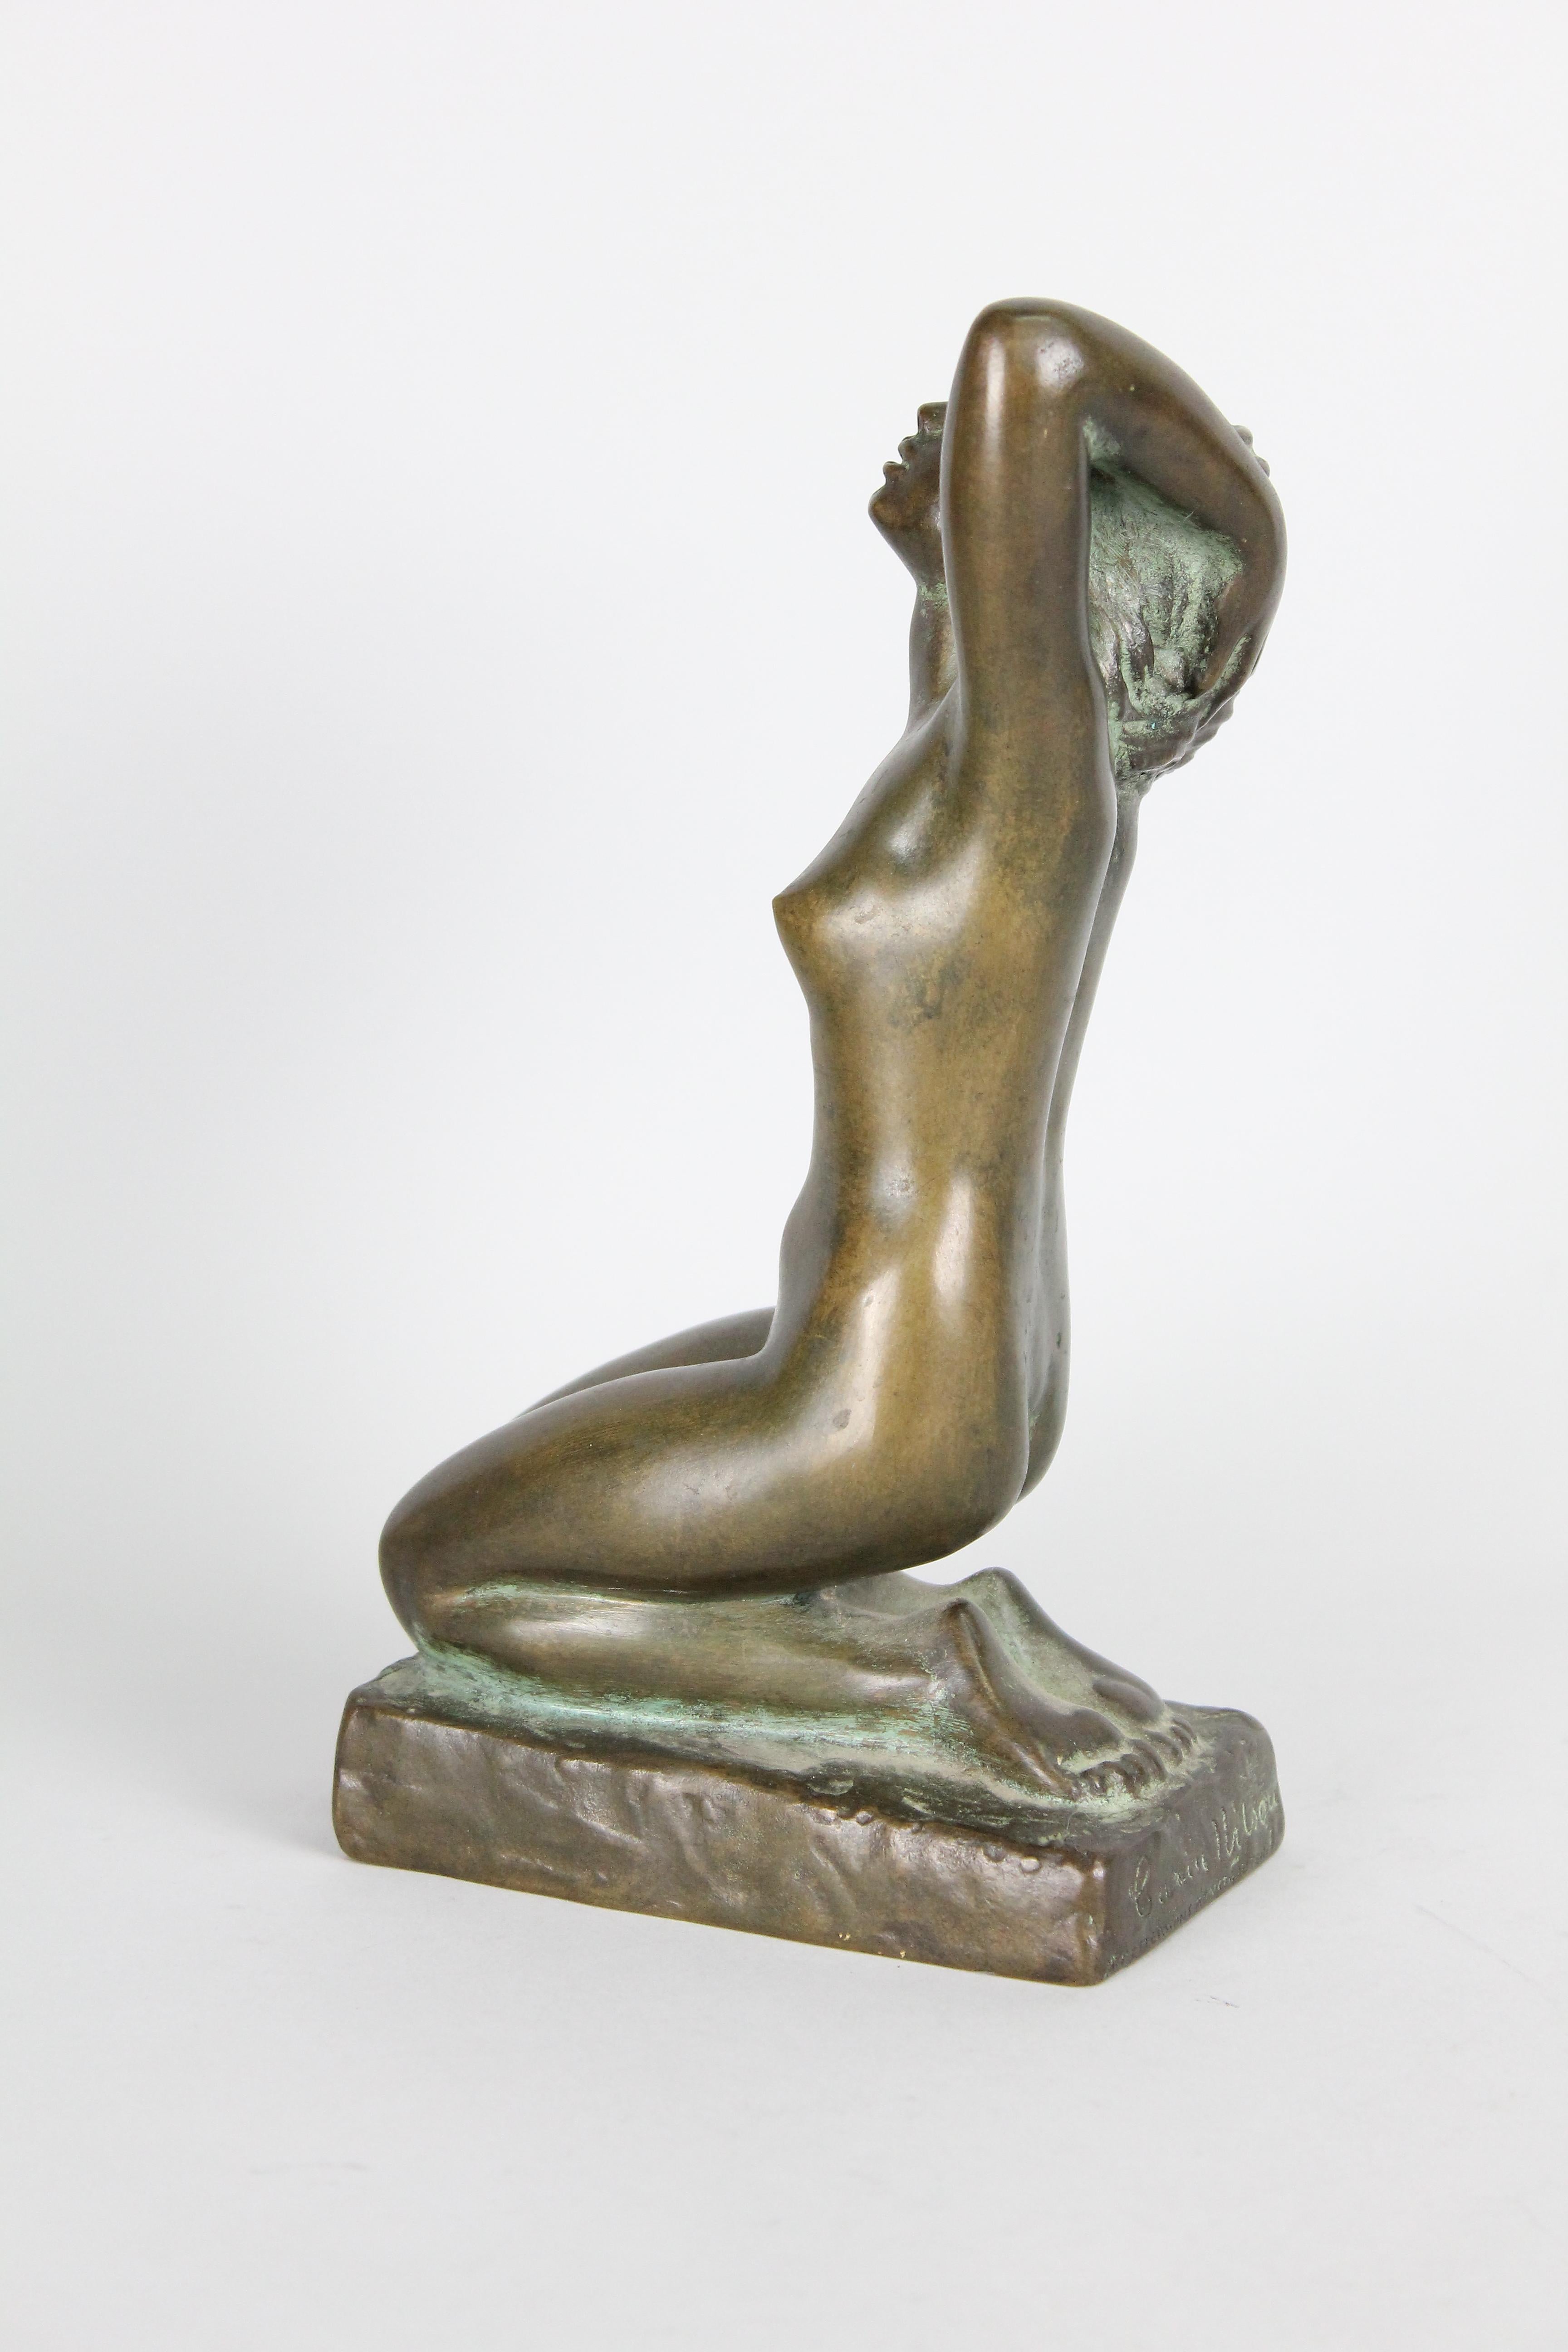 Patinated Carin Nilson, Swedish Bronze Nude Sculpture, 1940s